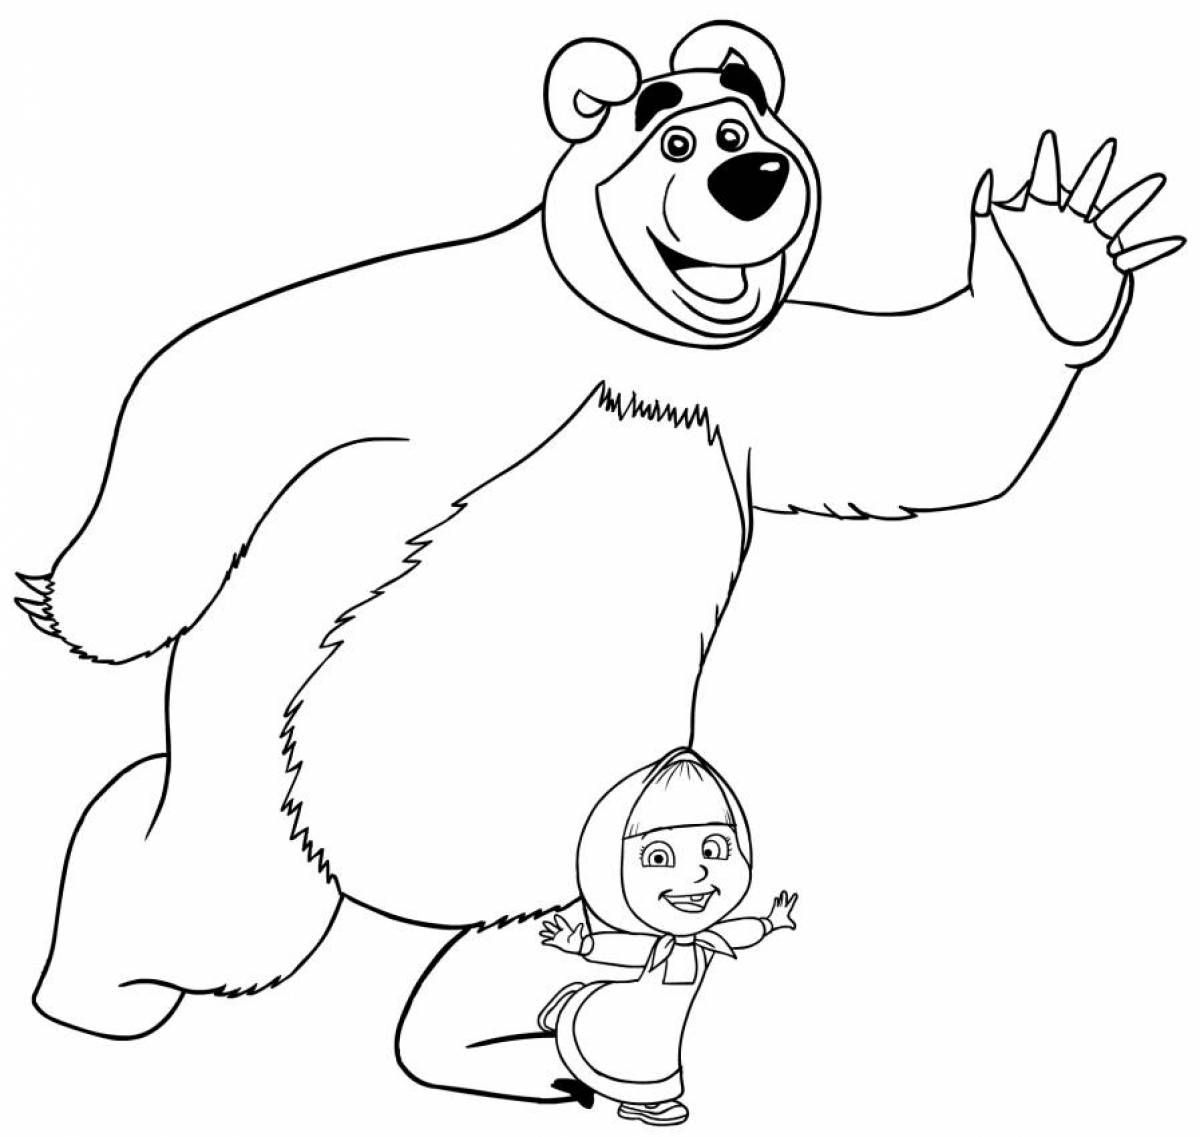 Wonderful Masha and the bear coloring book